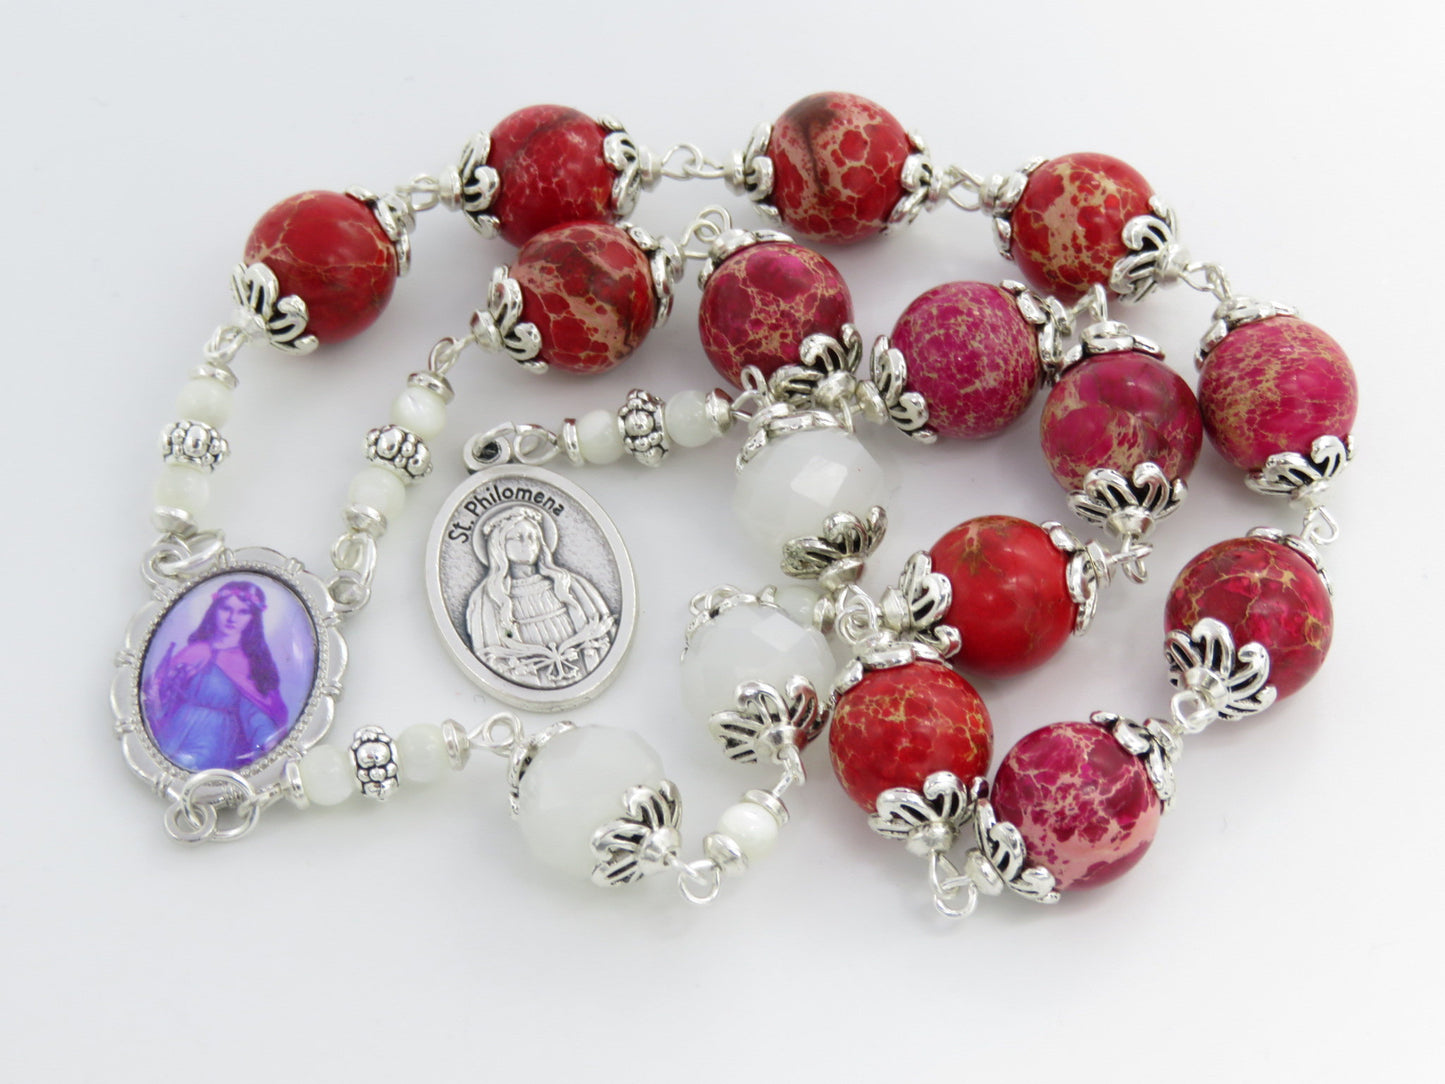 Large heirloom Jasper St Philomena prayer Chaplet beads, Large gemstone prayer beads, Patron Saints, Heirloom Rosaries, Rosary beads.